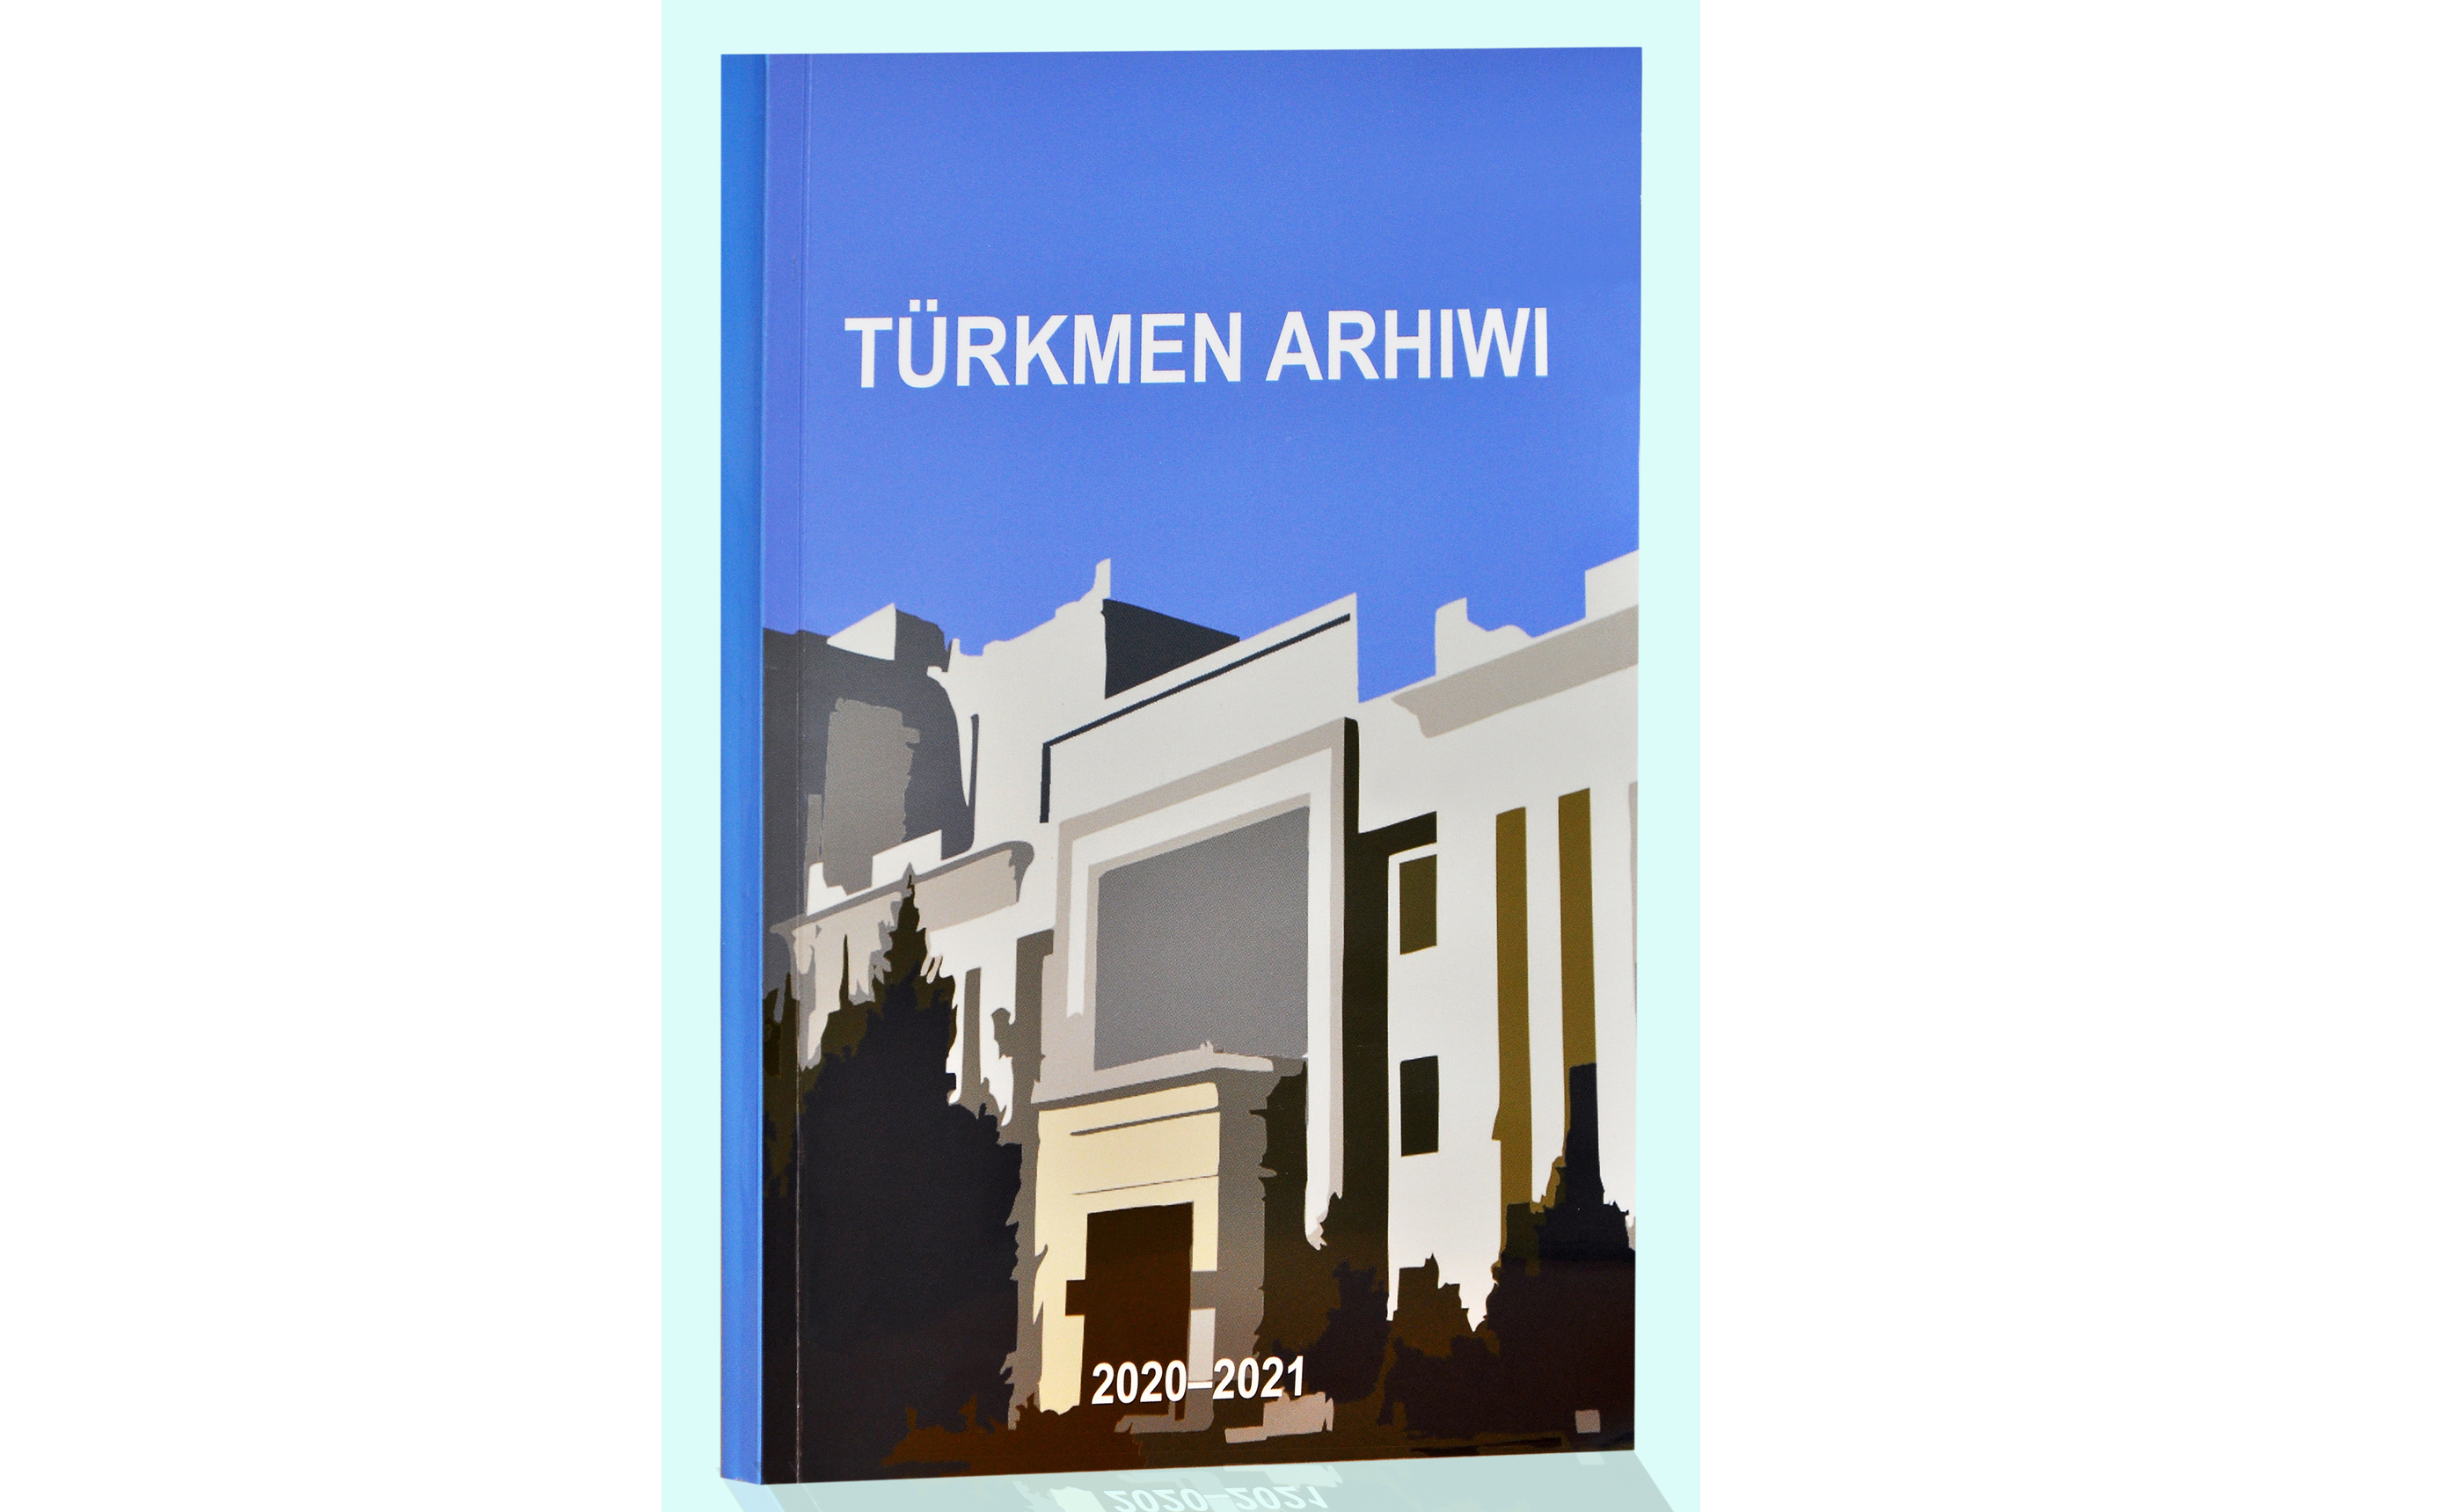 The next issue of the magazine «Turkmen arhiwi»